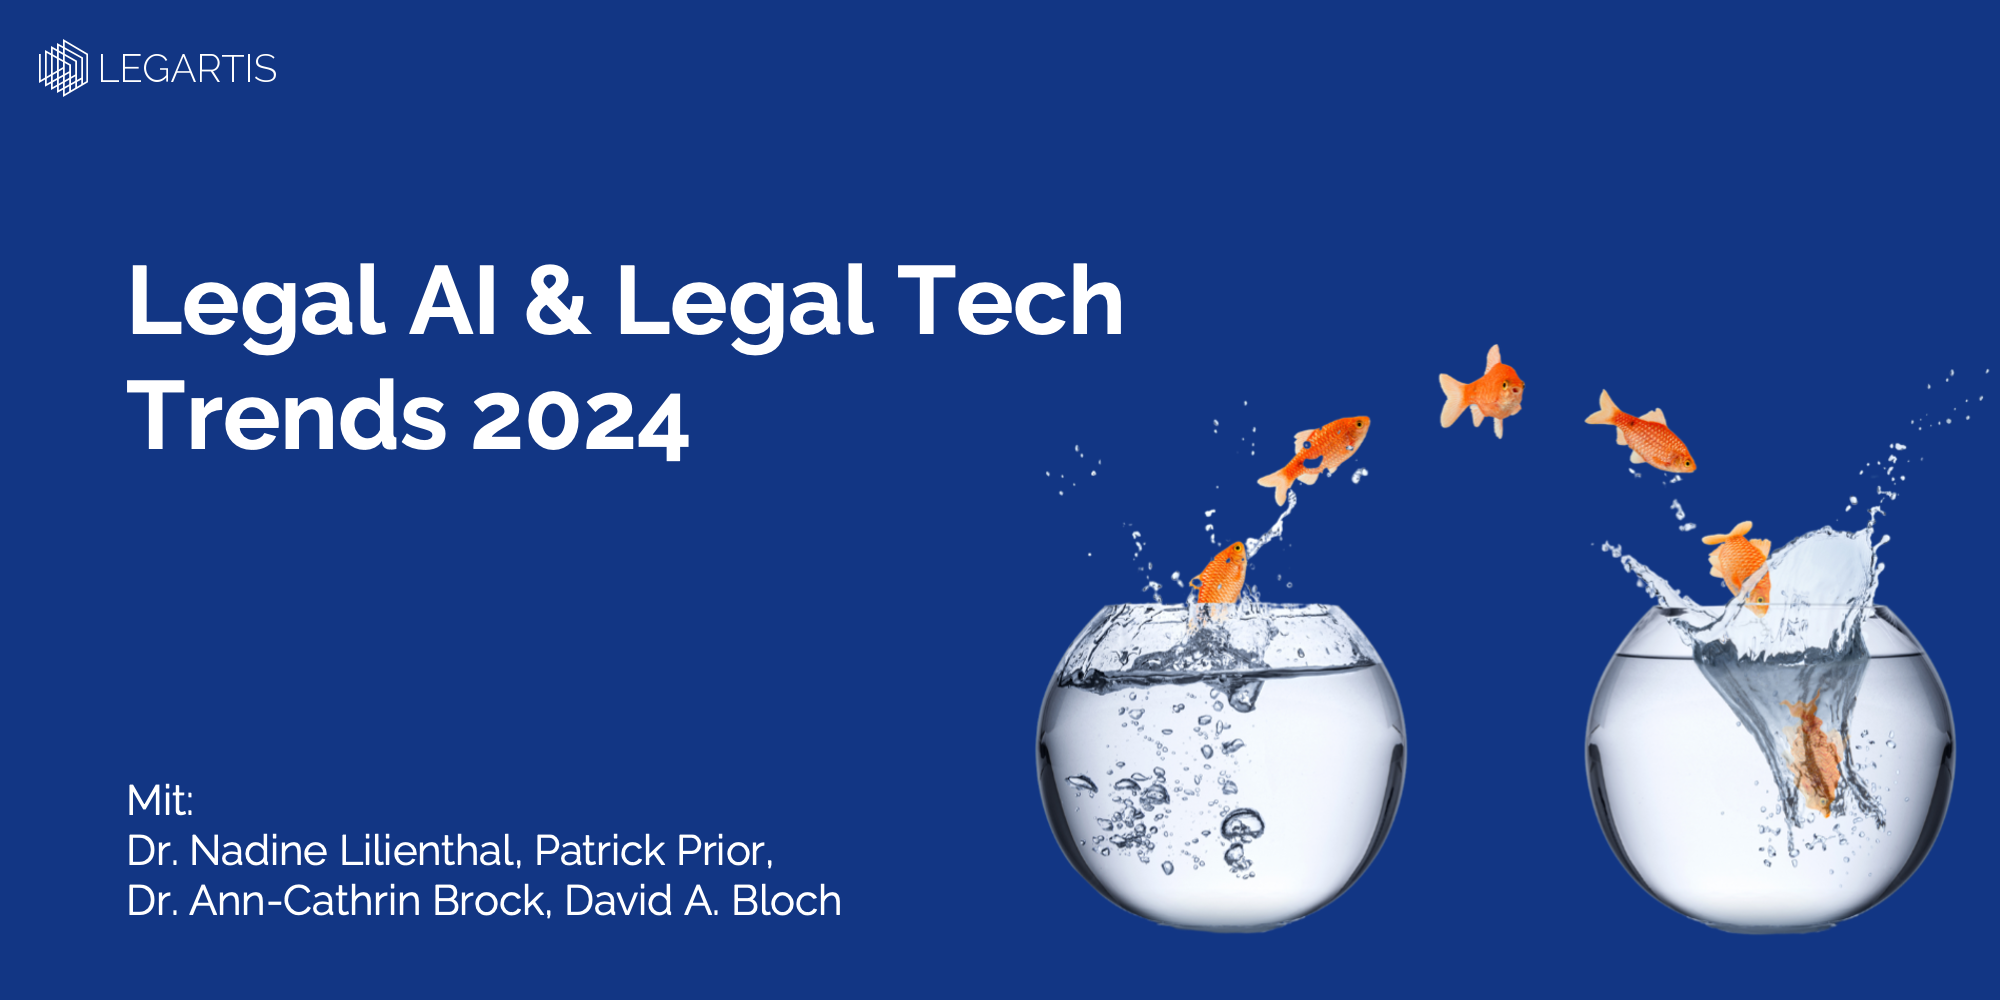 Legal AI & Legal Tech Trends 2024